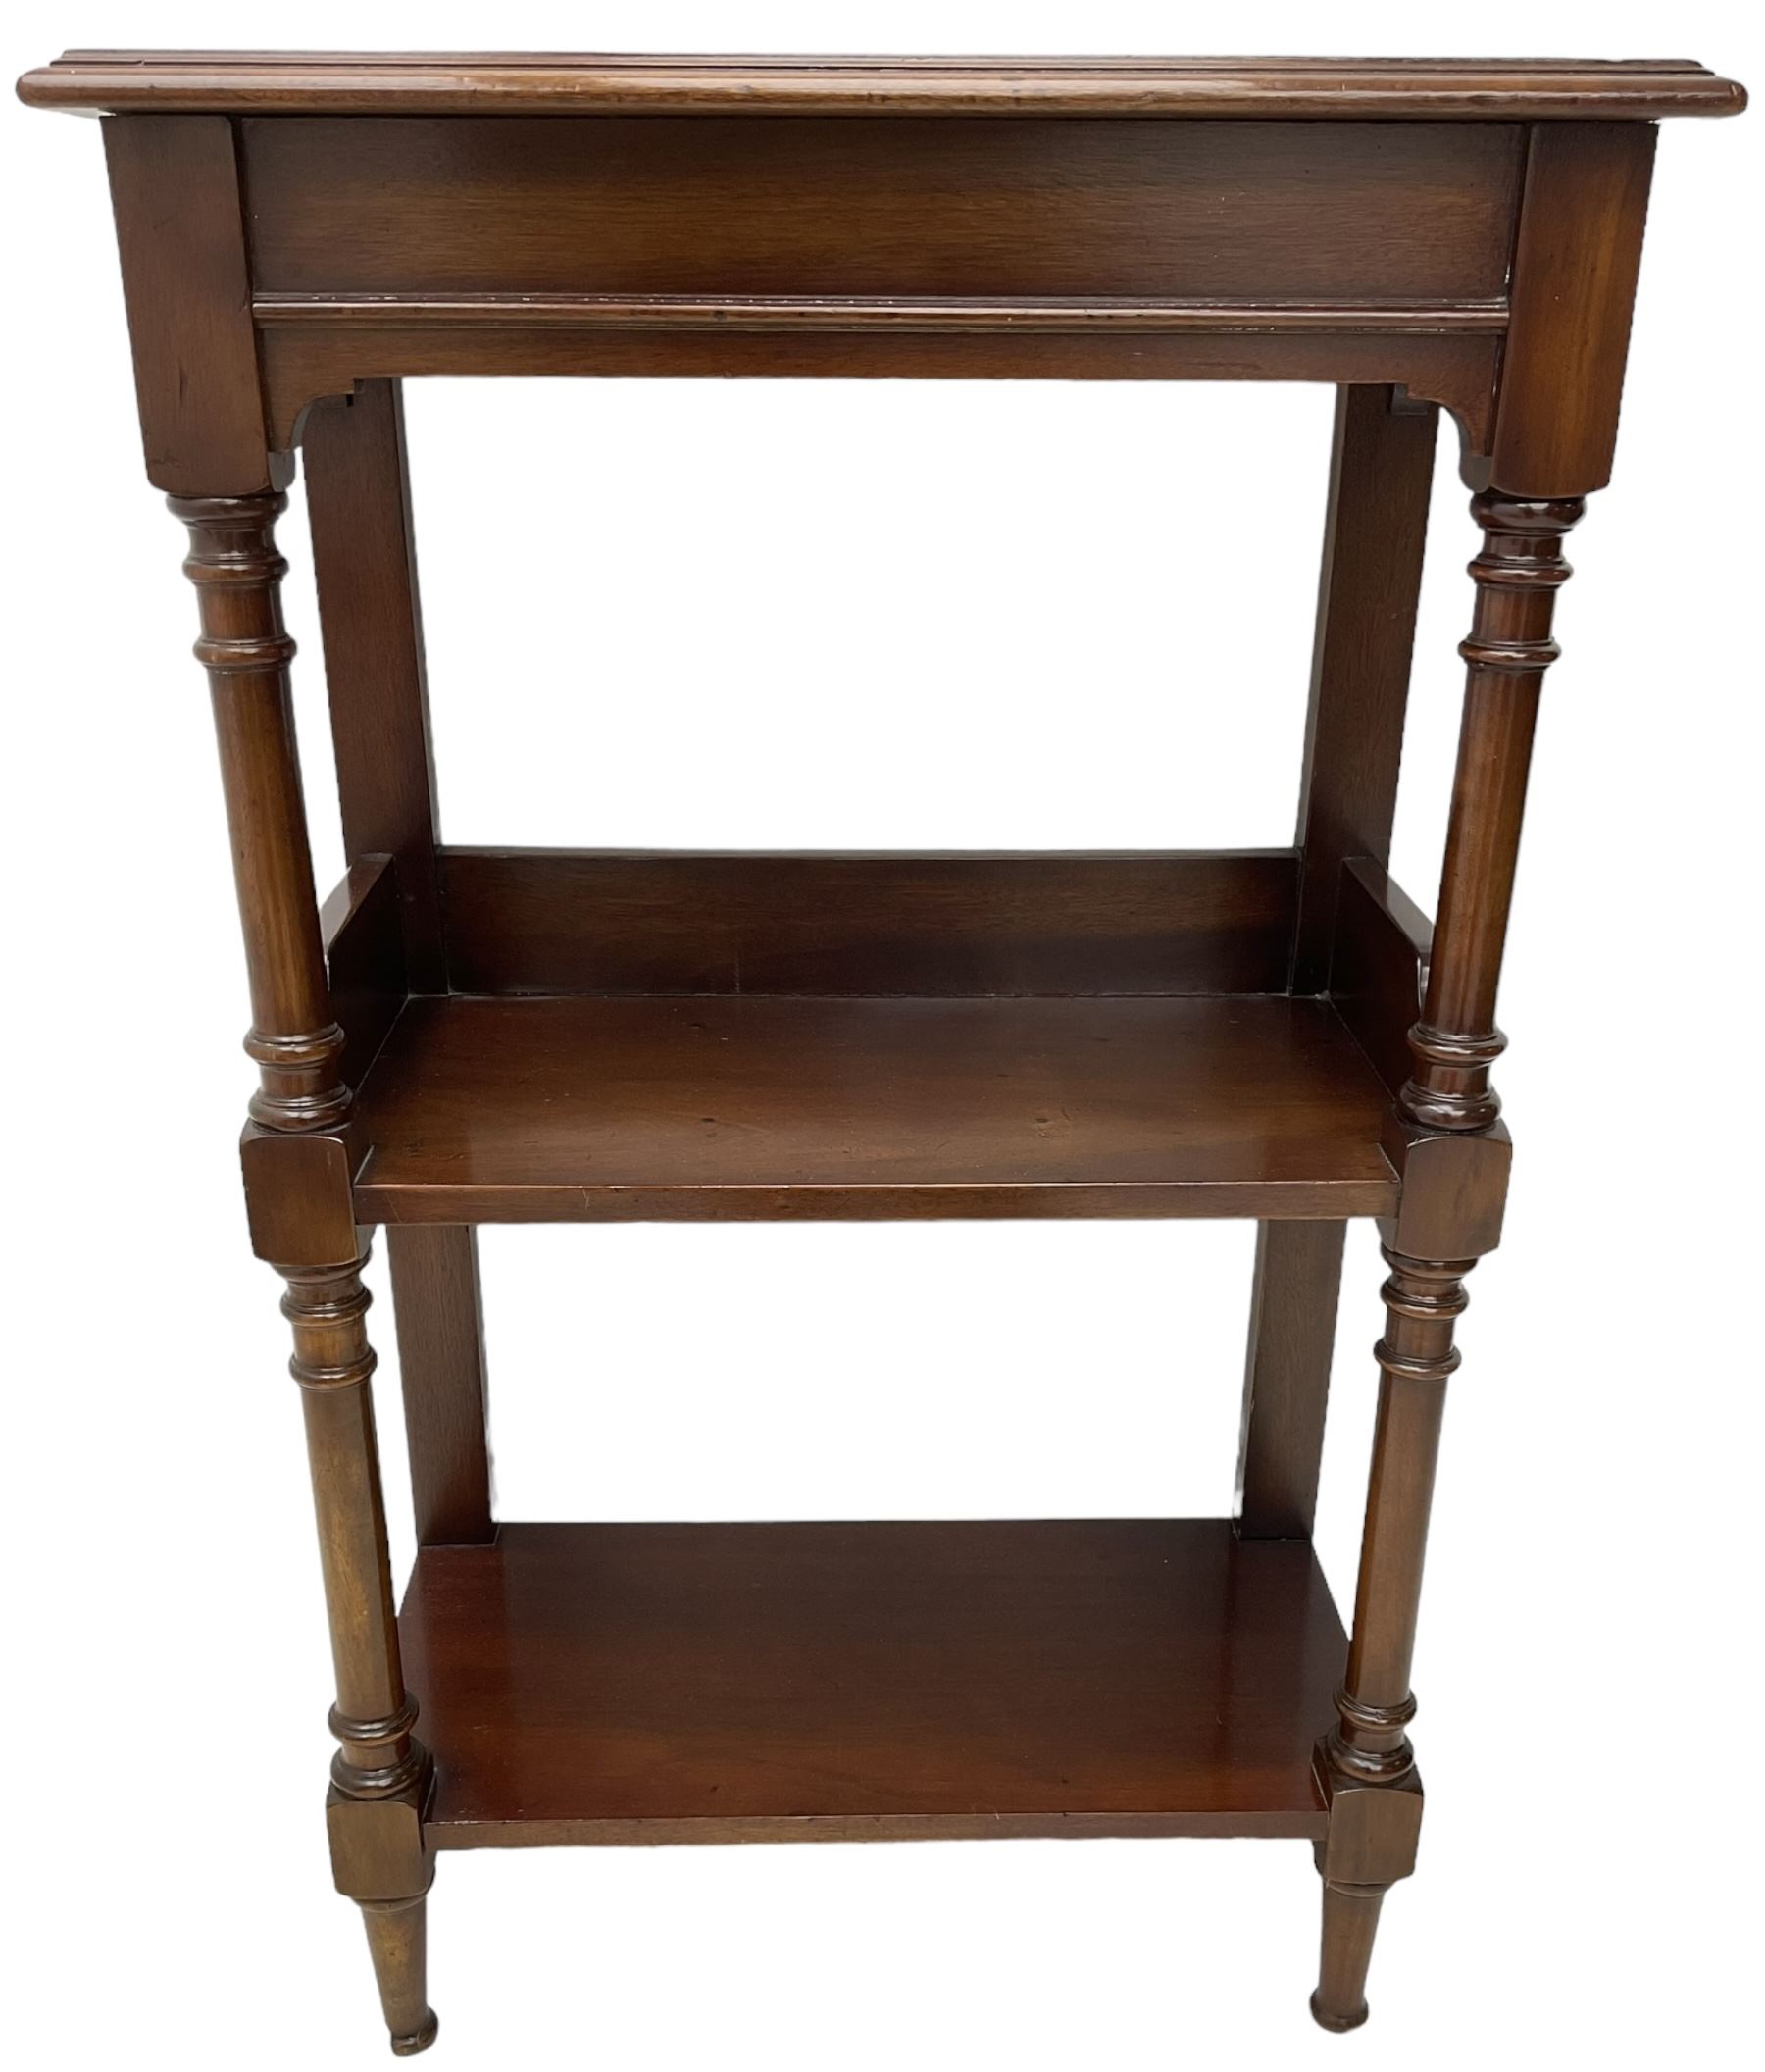 Victorian design mahogany three-tier stand - Image 6 of 7